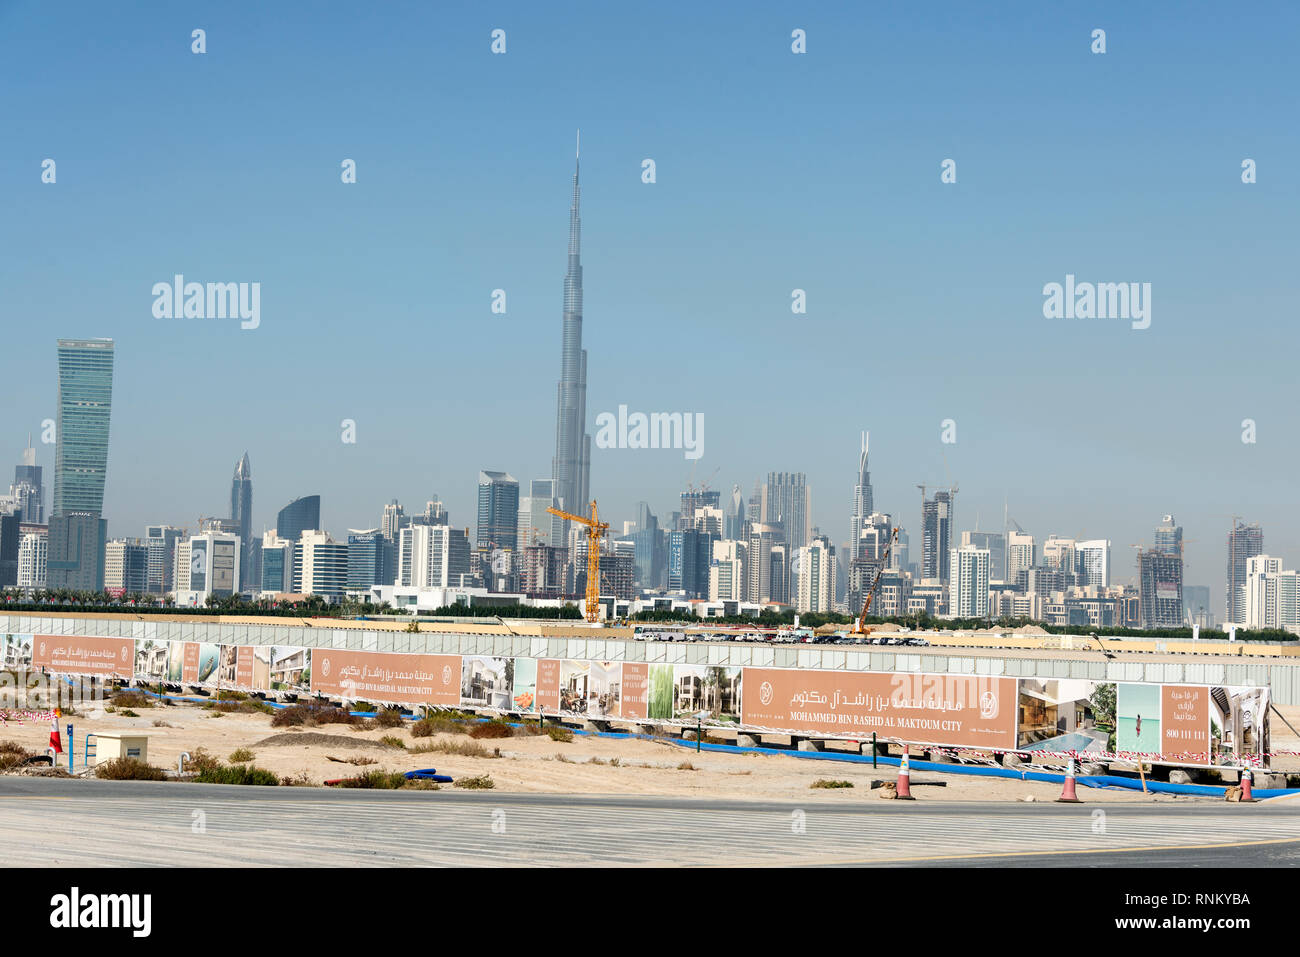 Skyline of downtown Dubai including the tall kilometre high metal structure of the Burj Khalifa, known as the Burj Dubai near the Dubai Race Course in Stock Photo